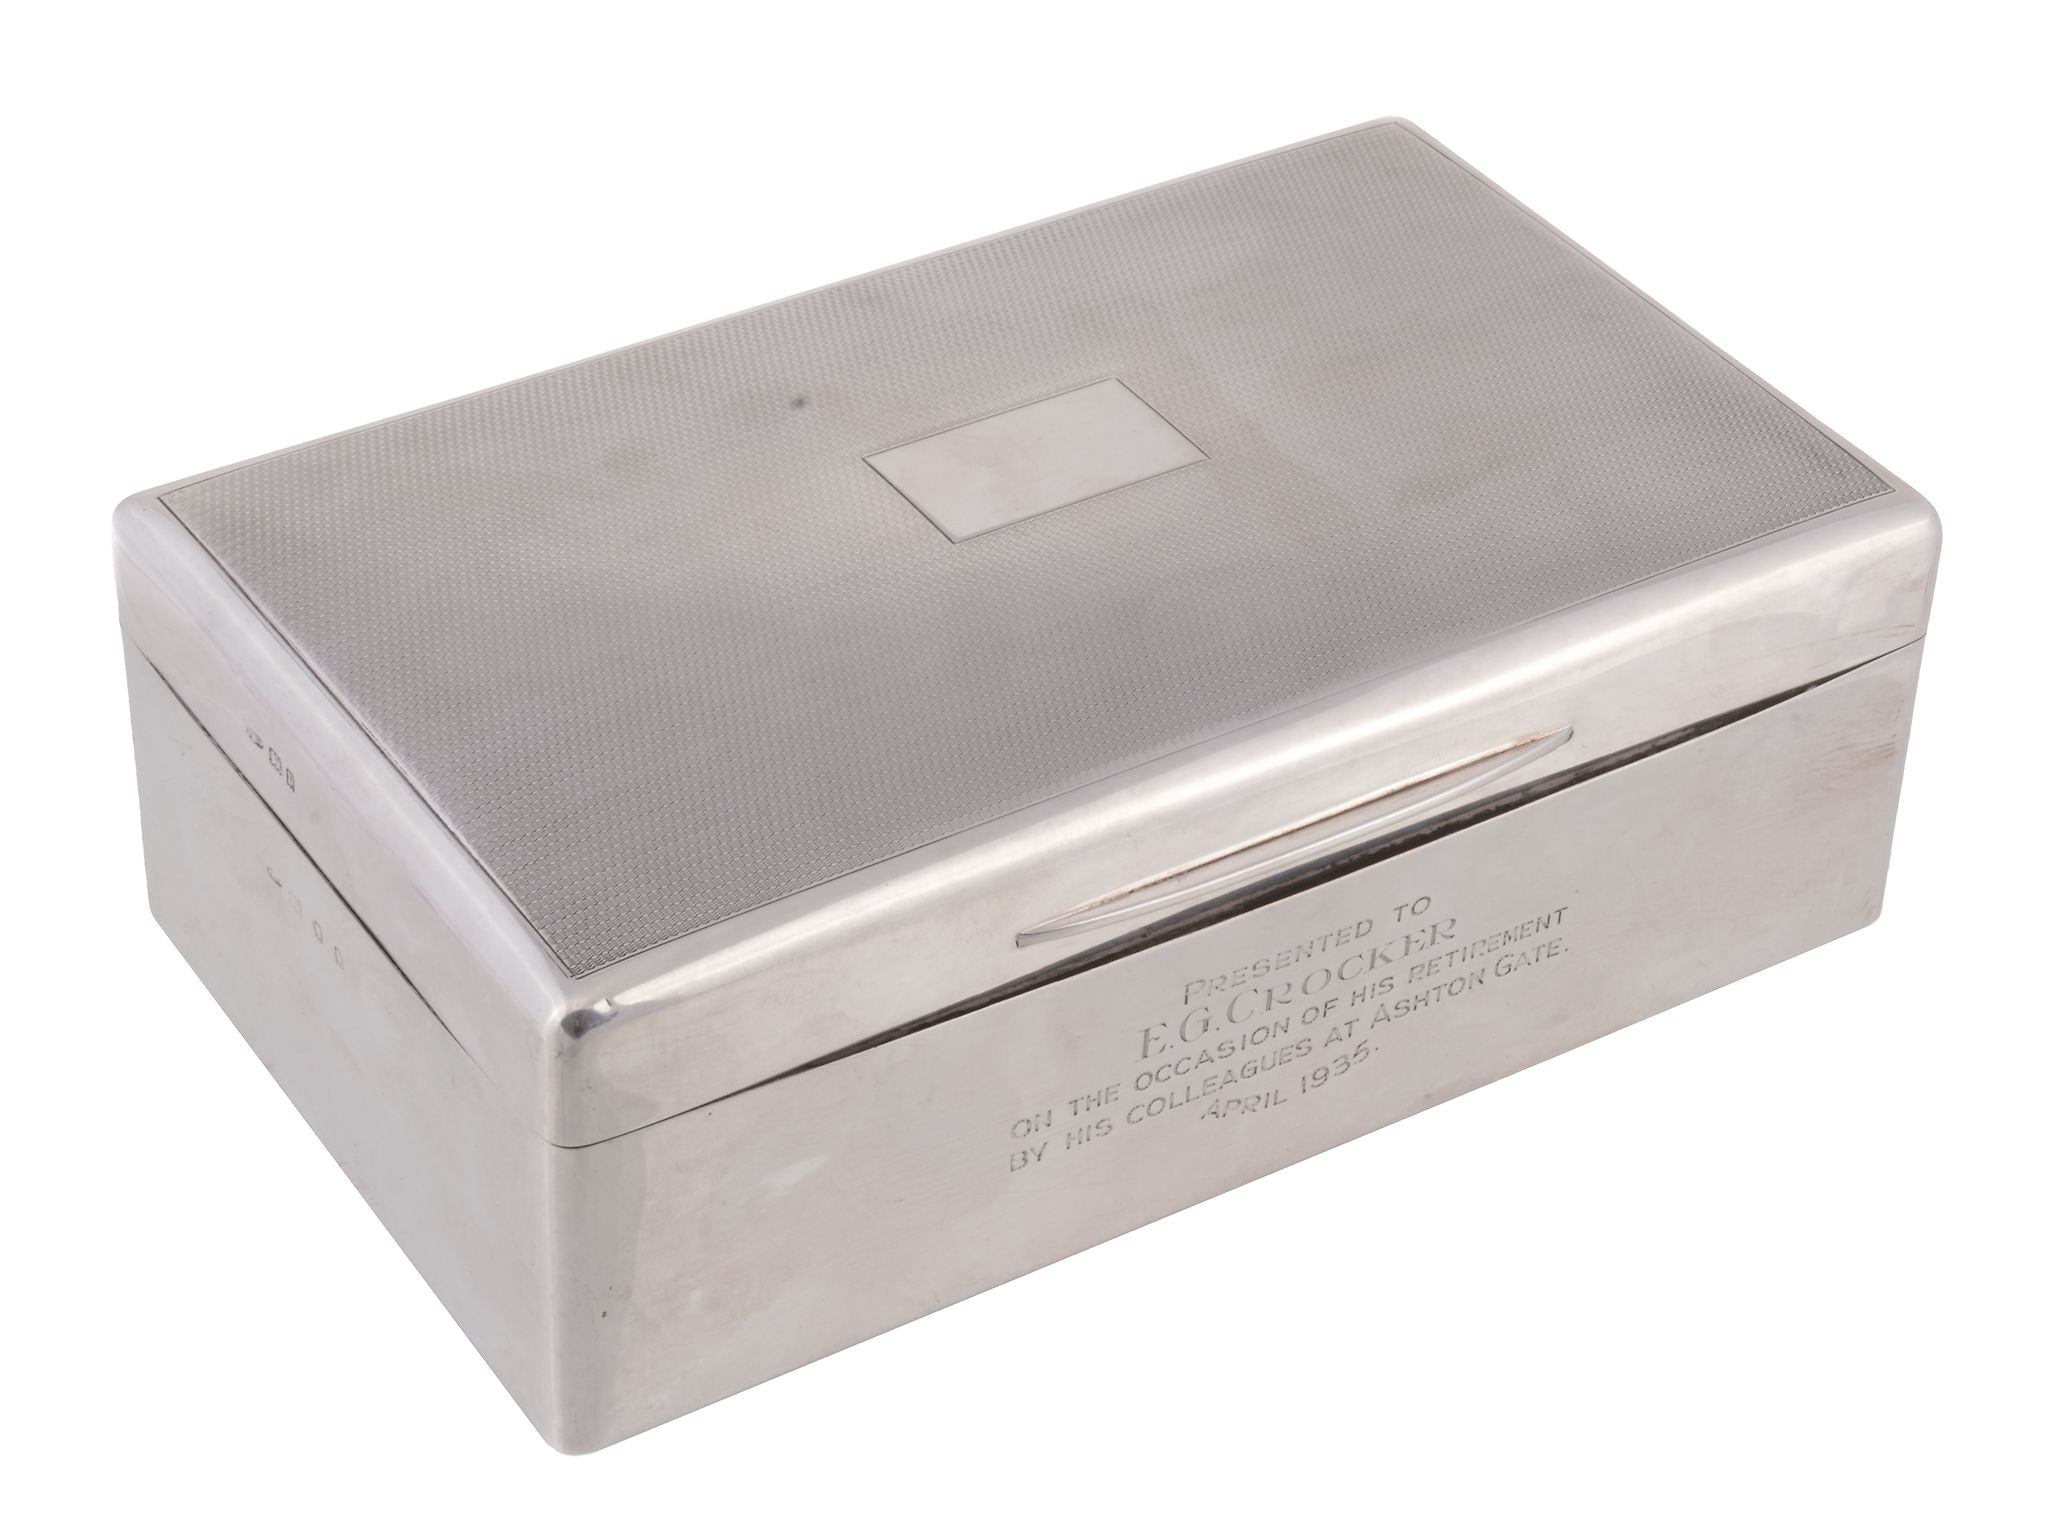 A silver rectangular cigar and cigarette box by Padgett & Braham Ltd  A silver rectangular cigar and